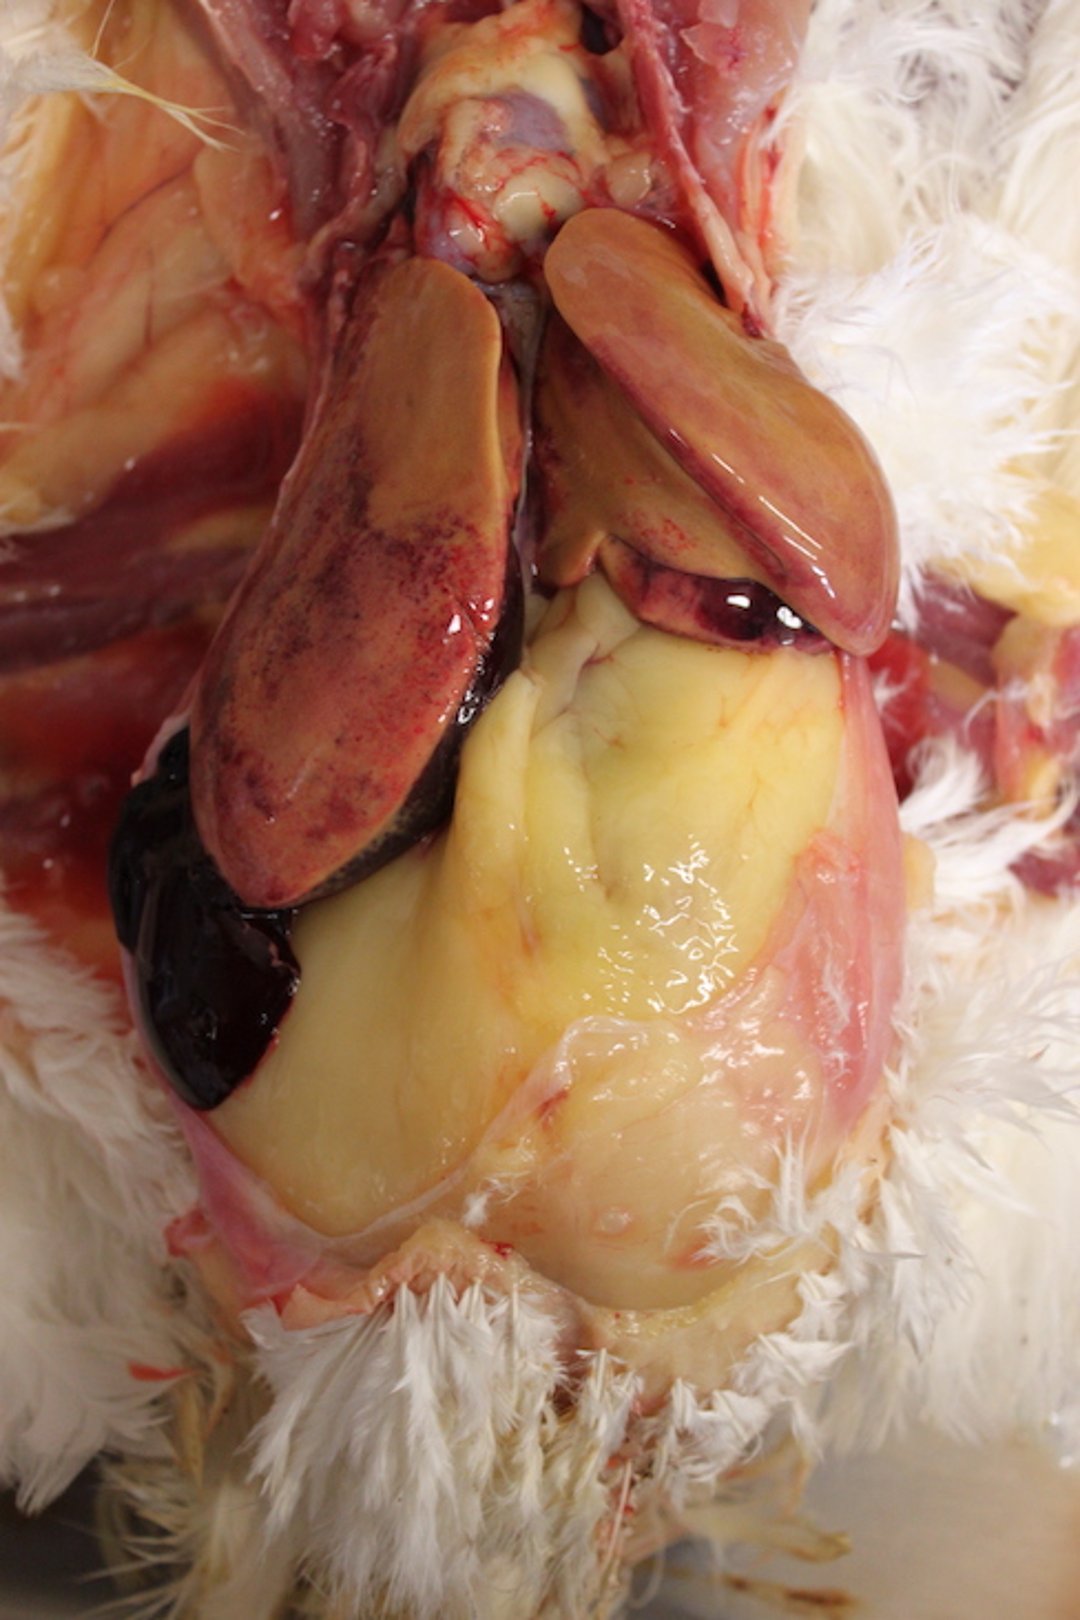 Fatty liver hemorrhagic syndrome, chicken